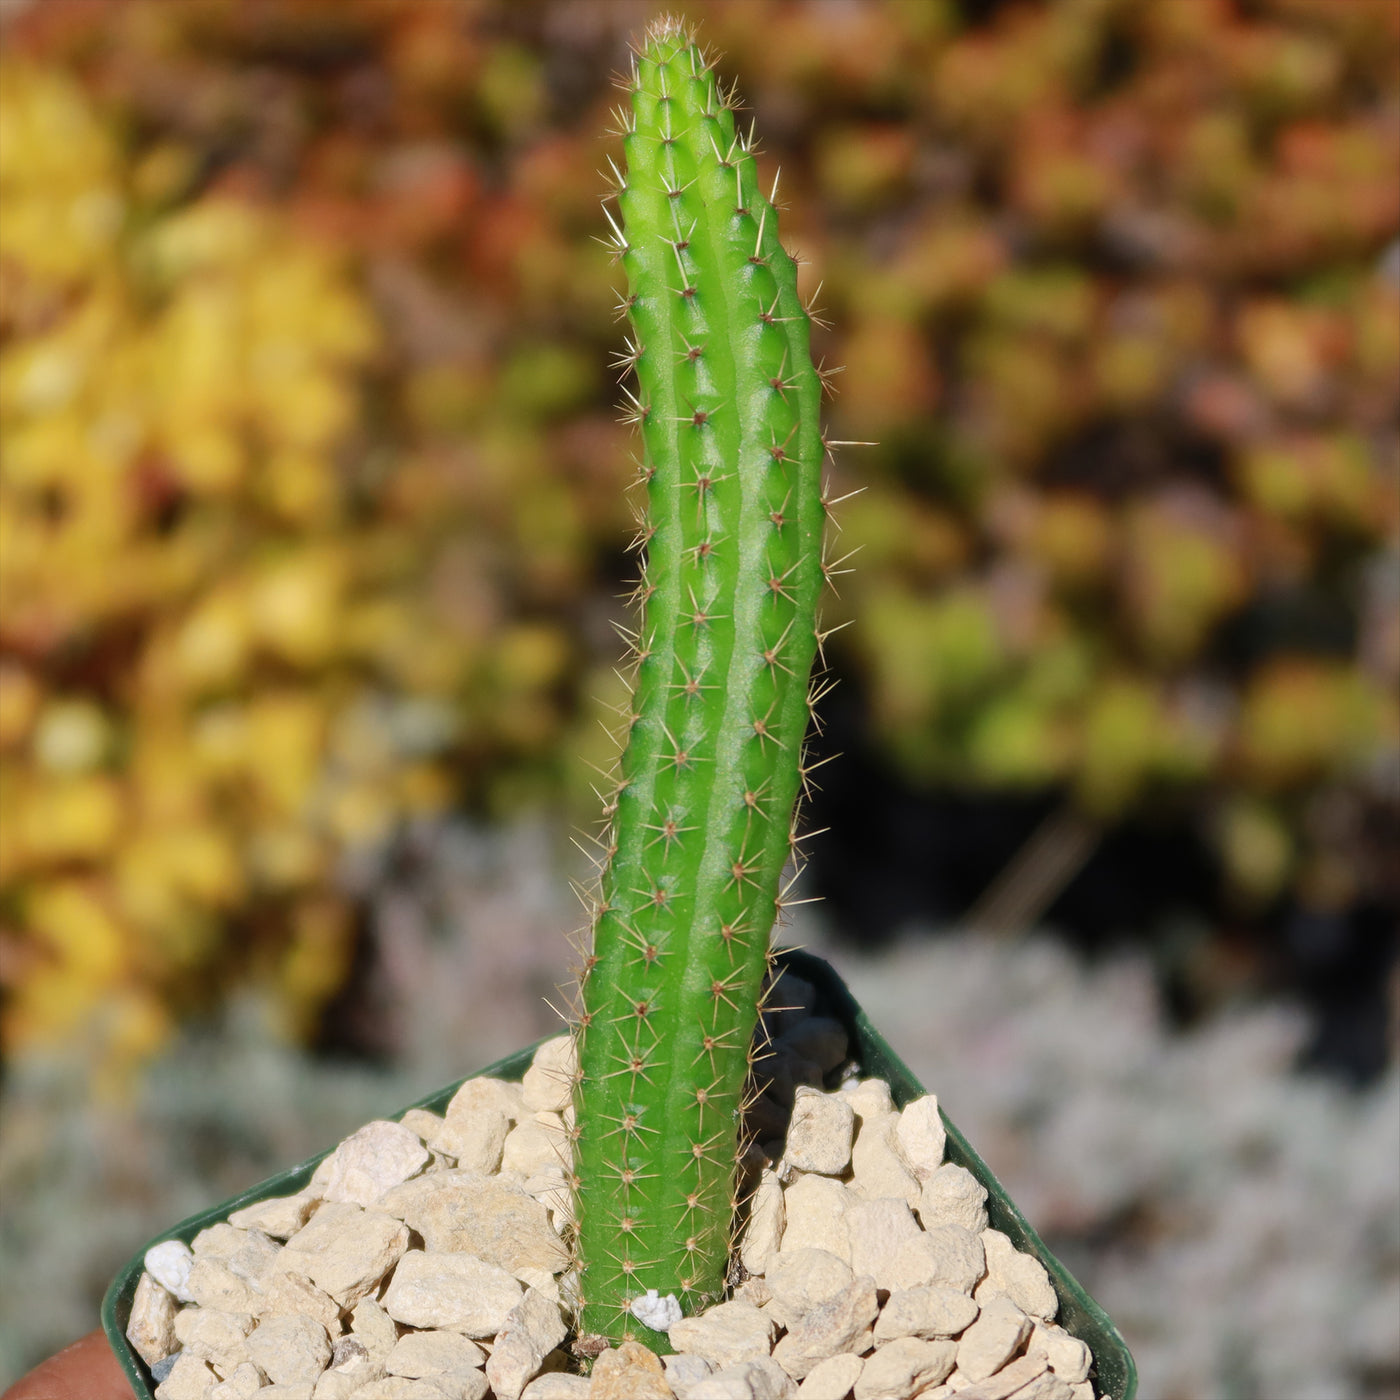 Cleistocactus Samaipatanus